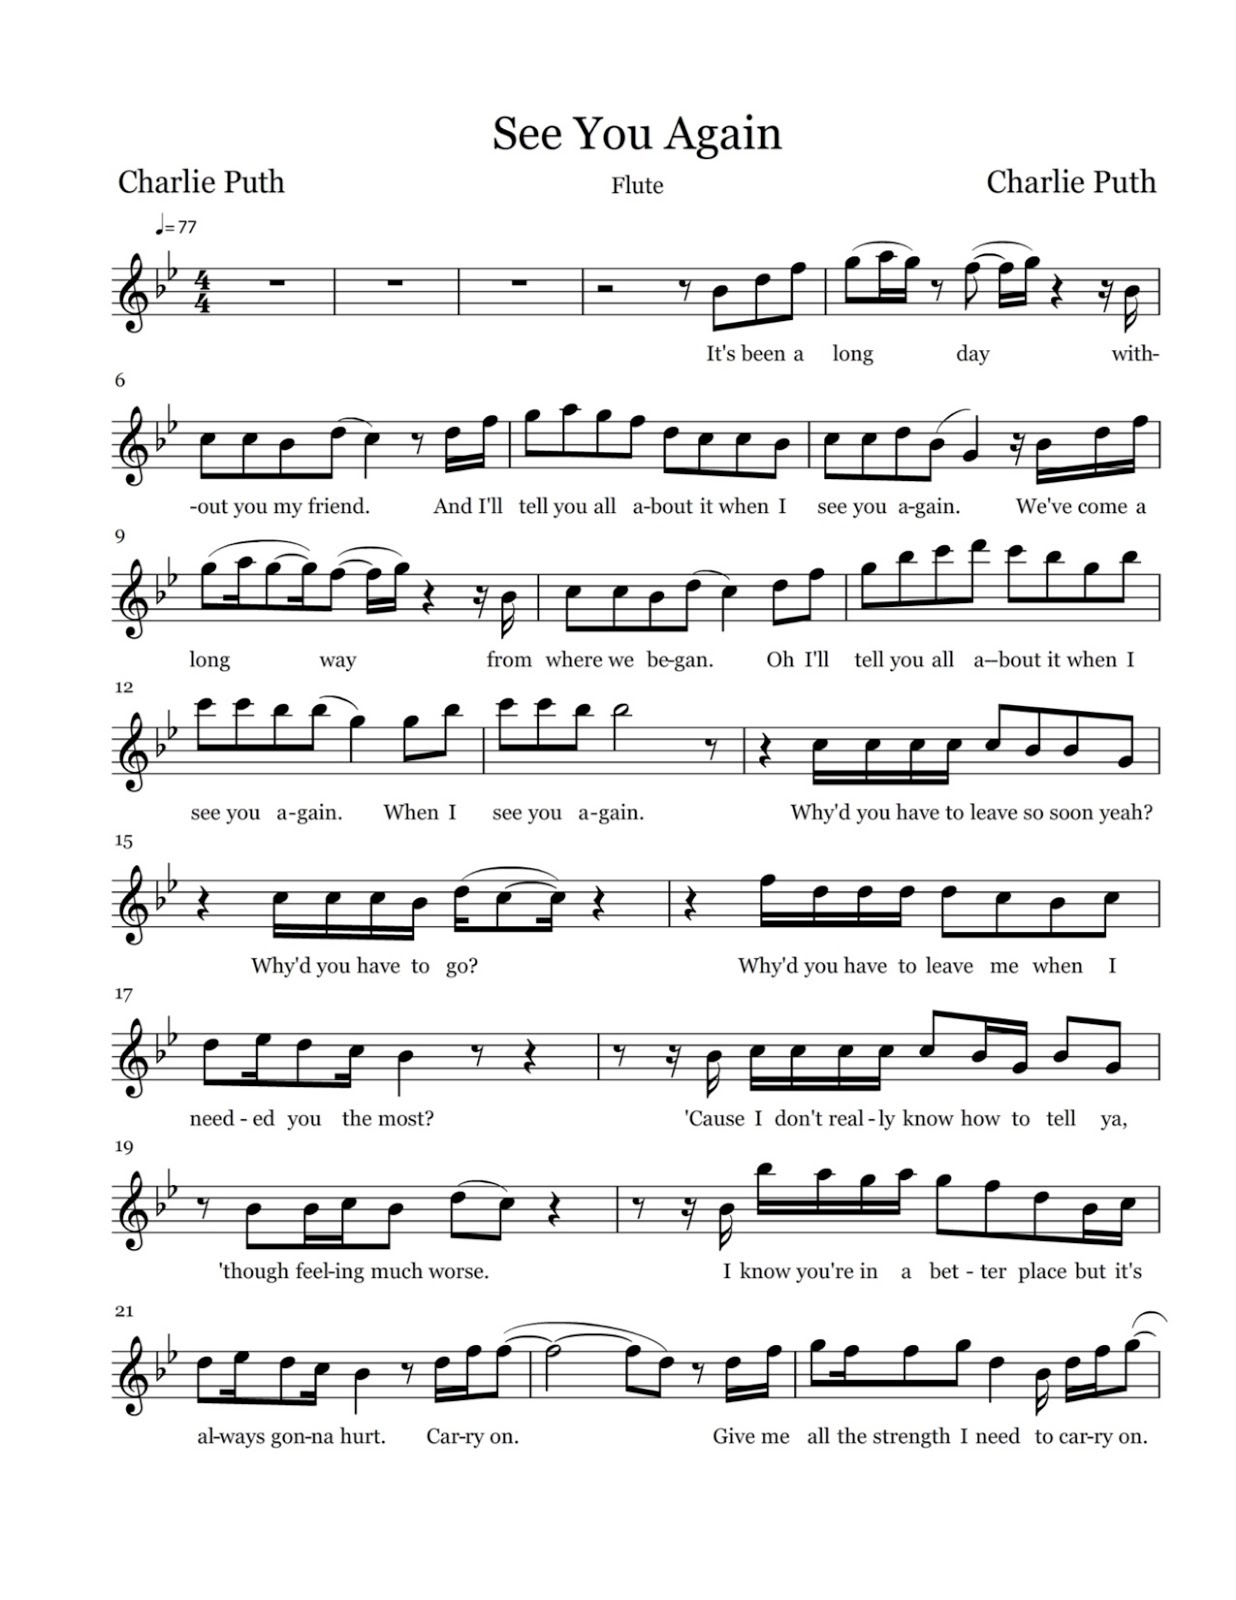 Flute Sheet Music: See You Again - Sheet Music - Dynamite Piano Sheet Music Free Printable